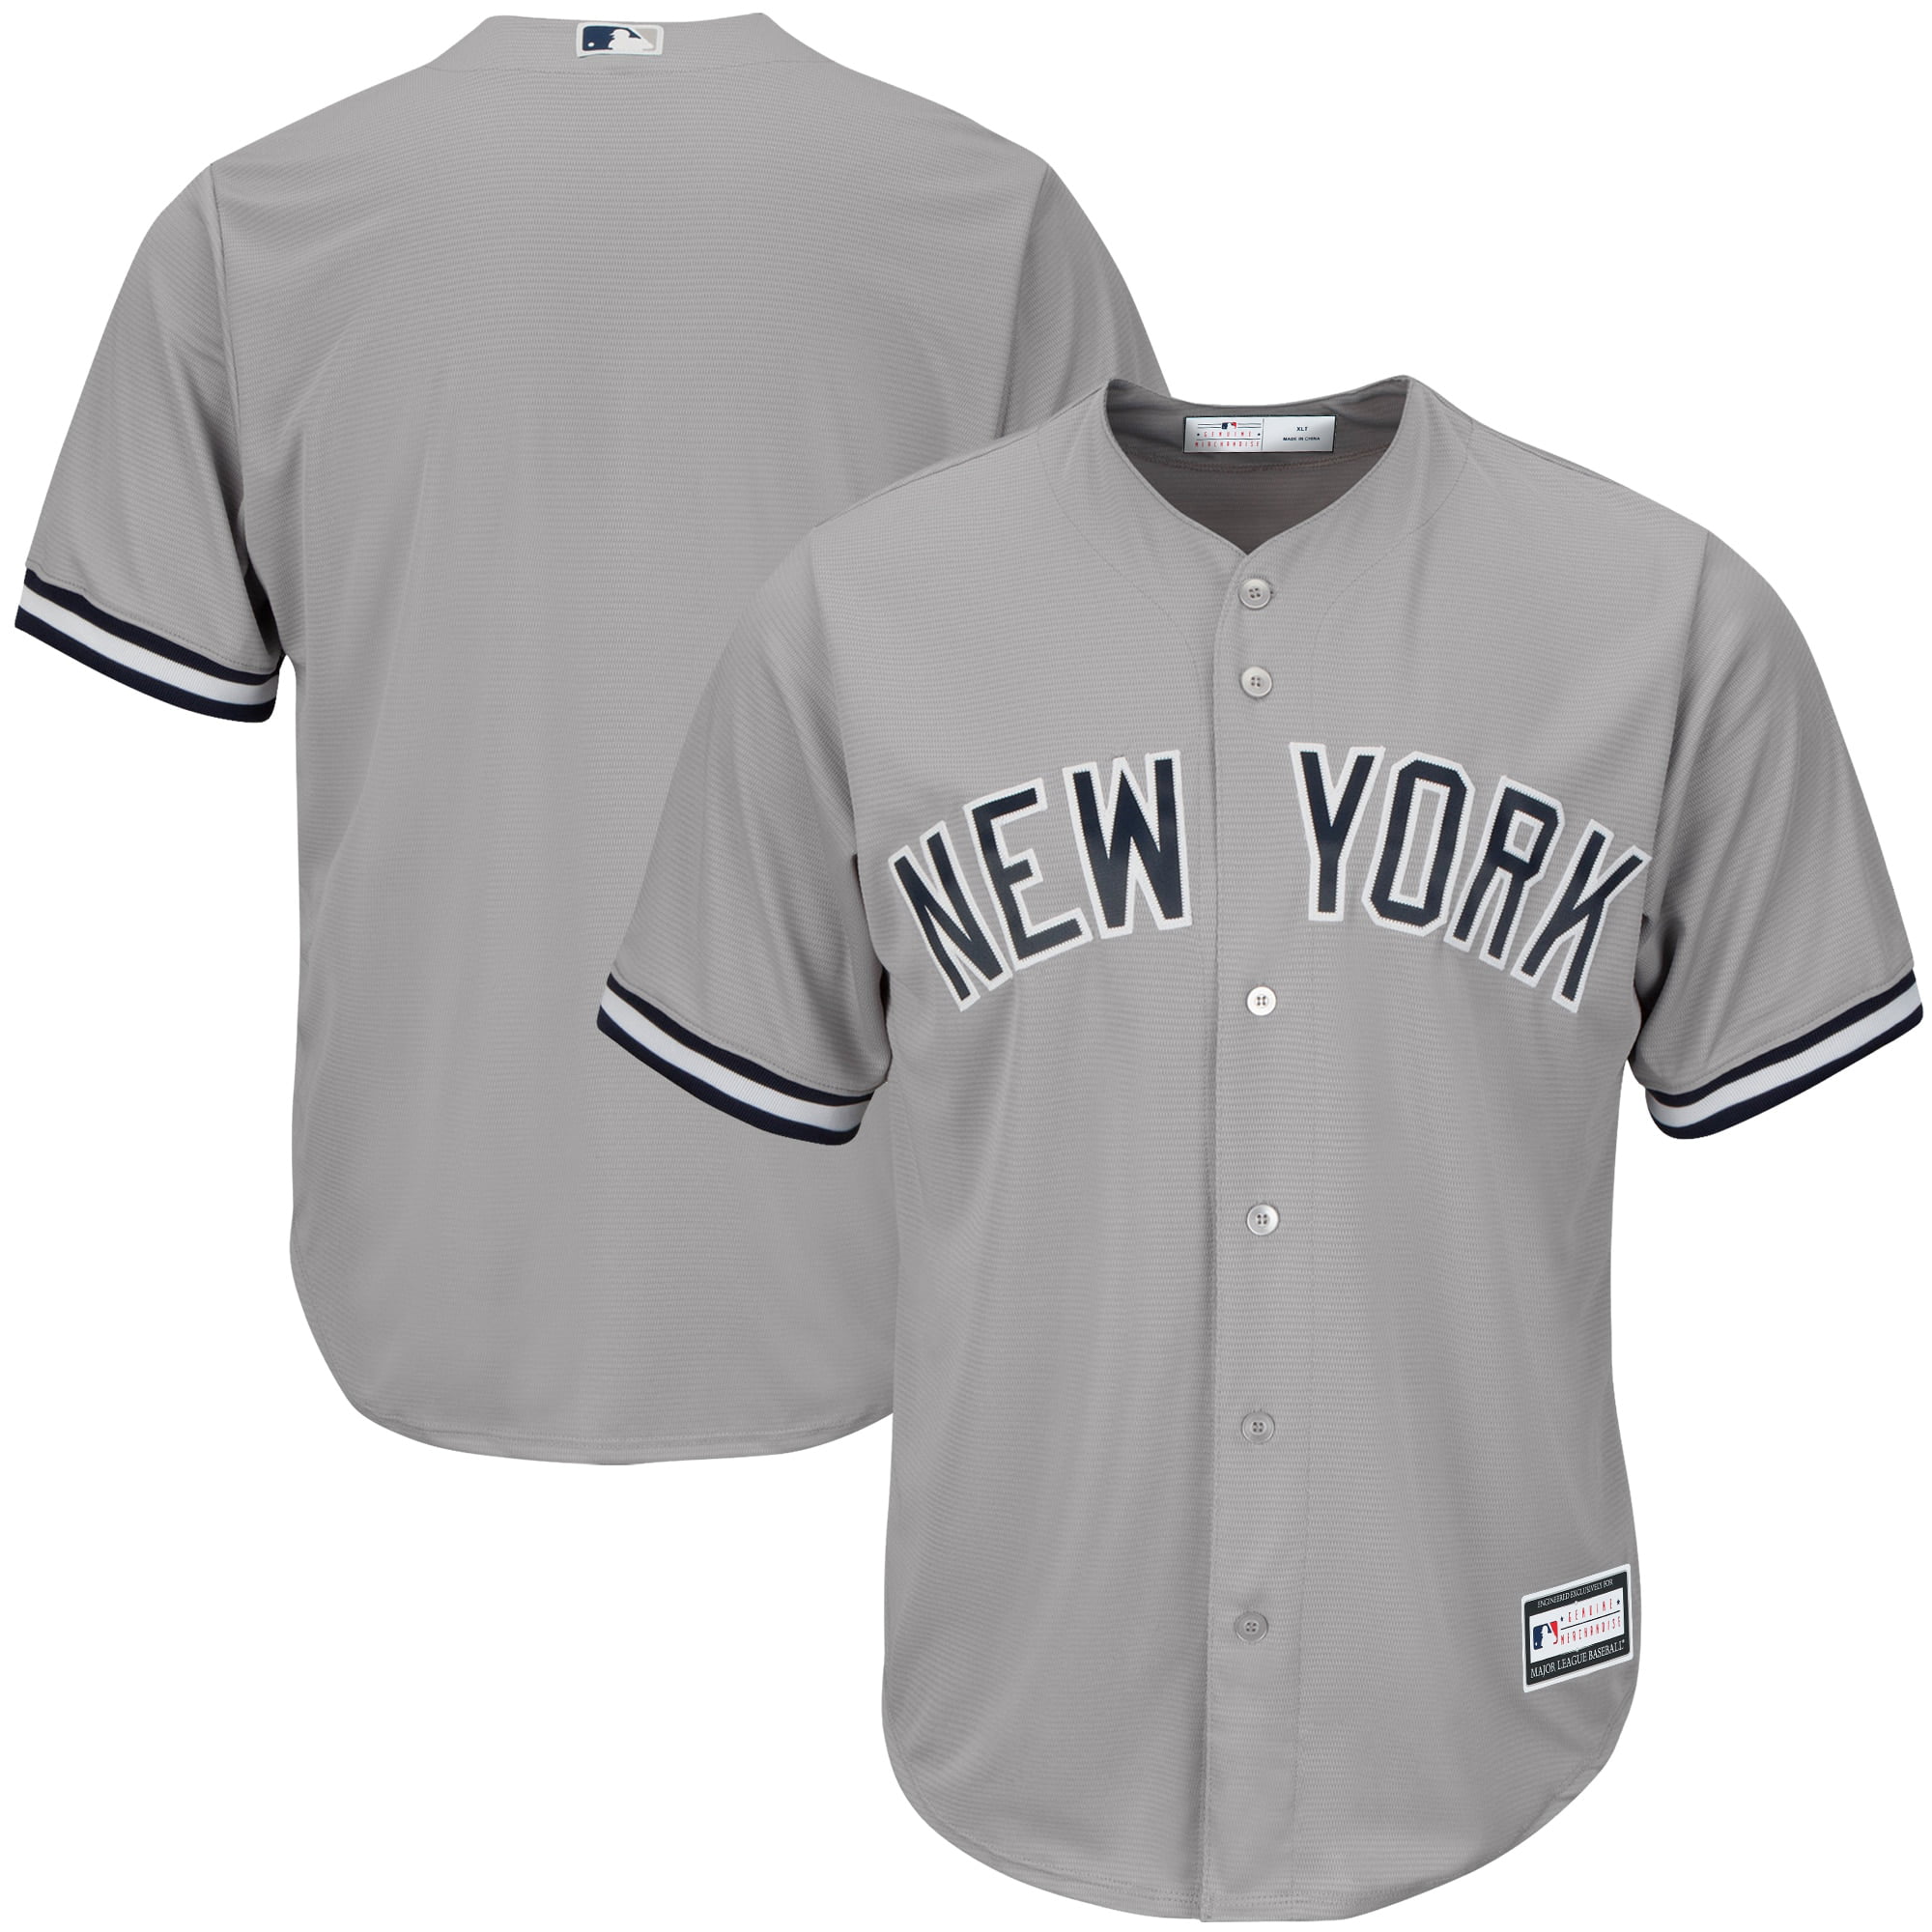 MLB New York Yankees Away Replica Jersey, Gray, Large